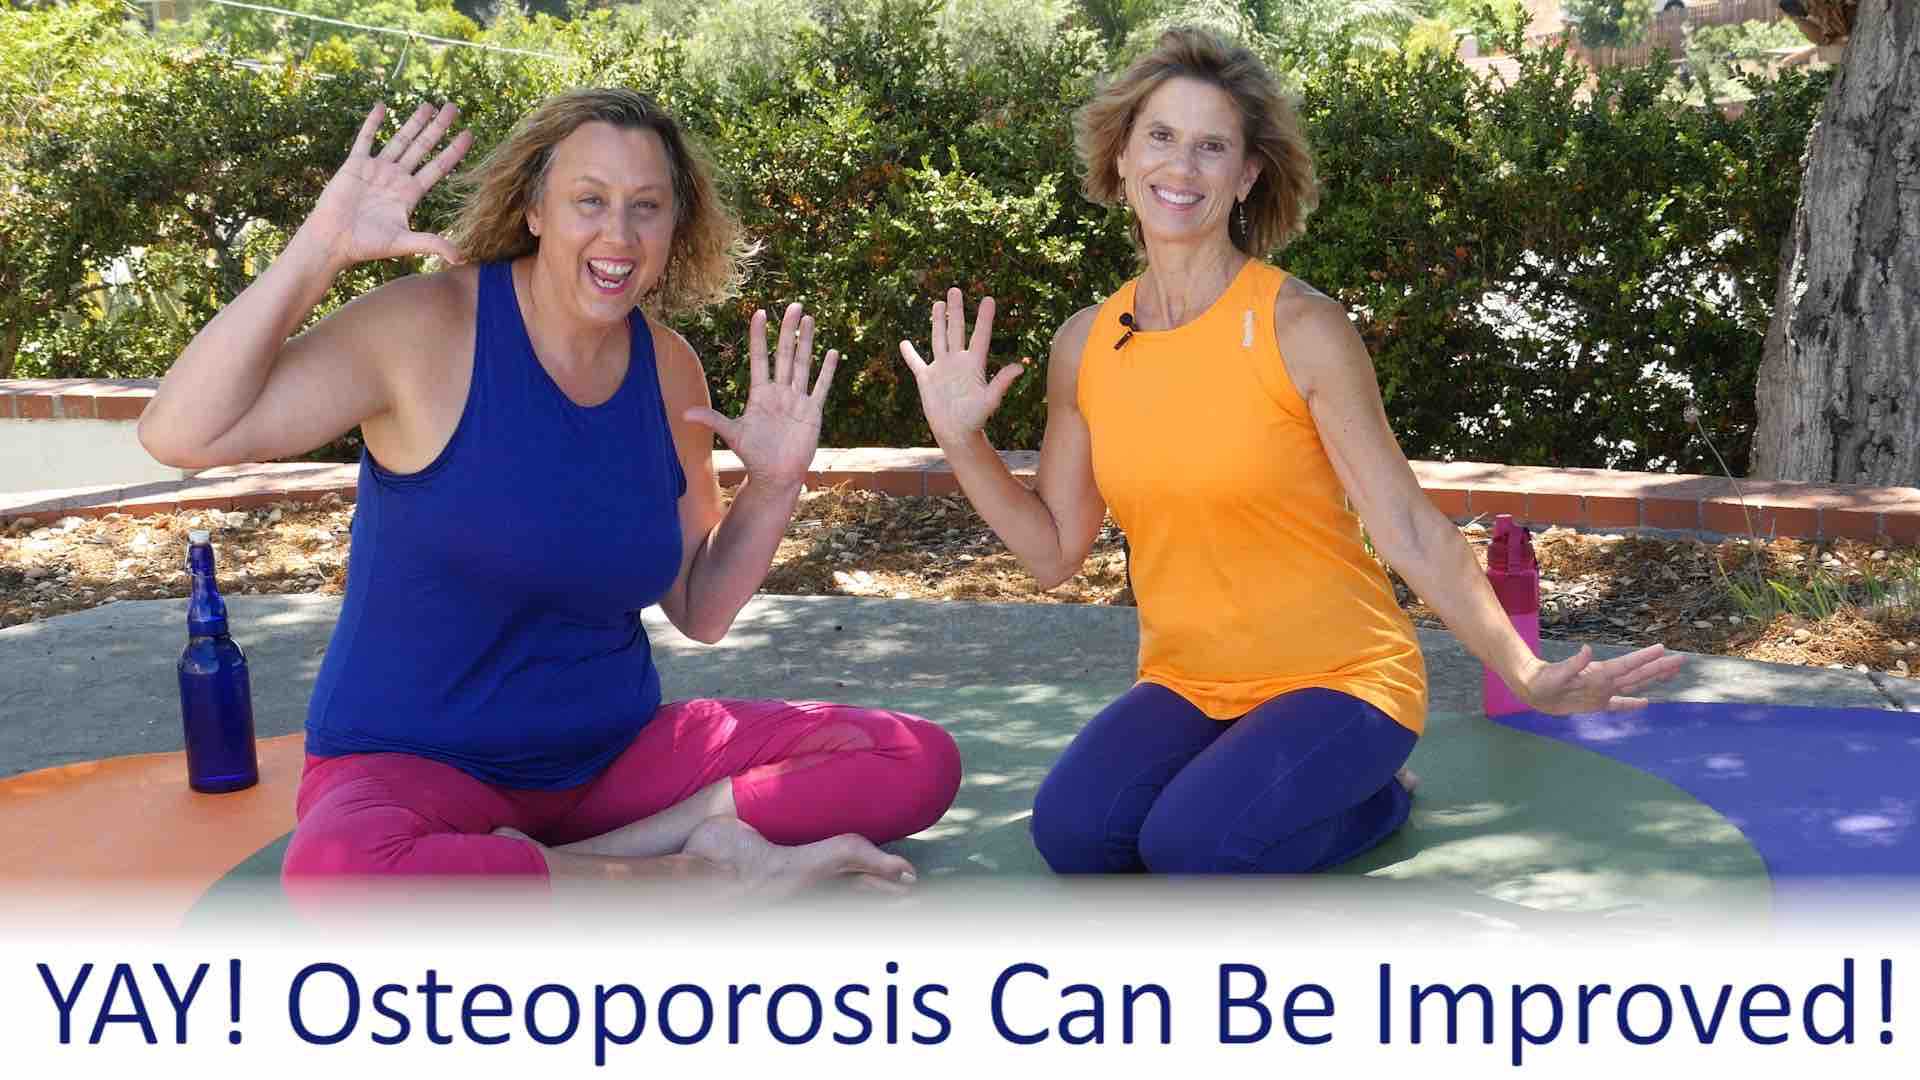 Sherry Zak Morris & Justine Shelton Osteoporosis can be Improved